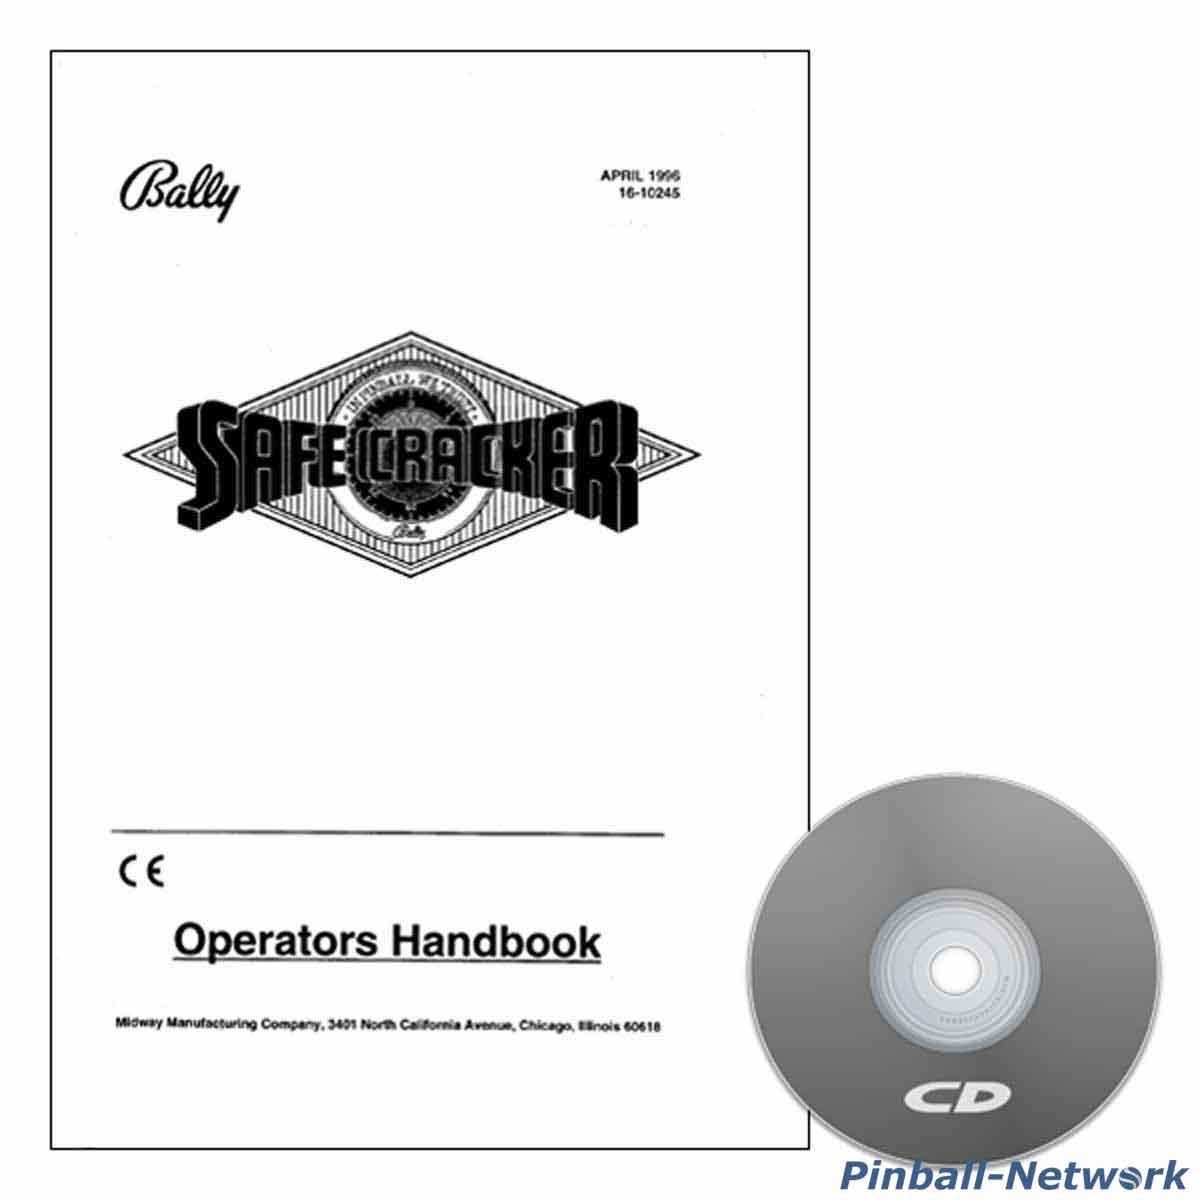 Safe Cracker Operators Handbook